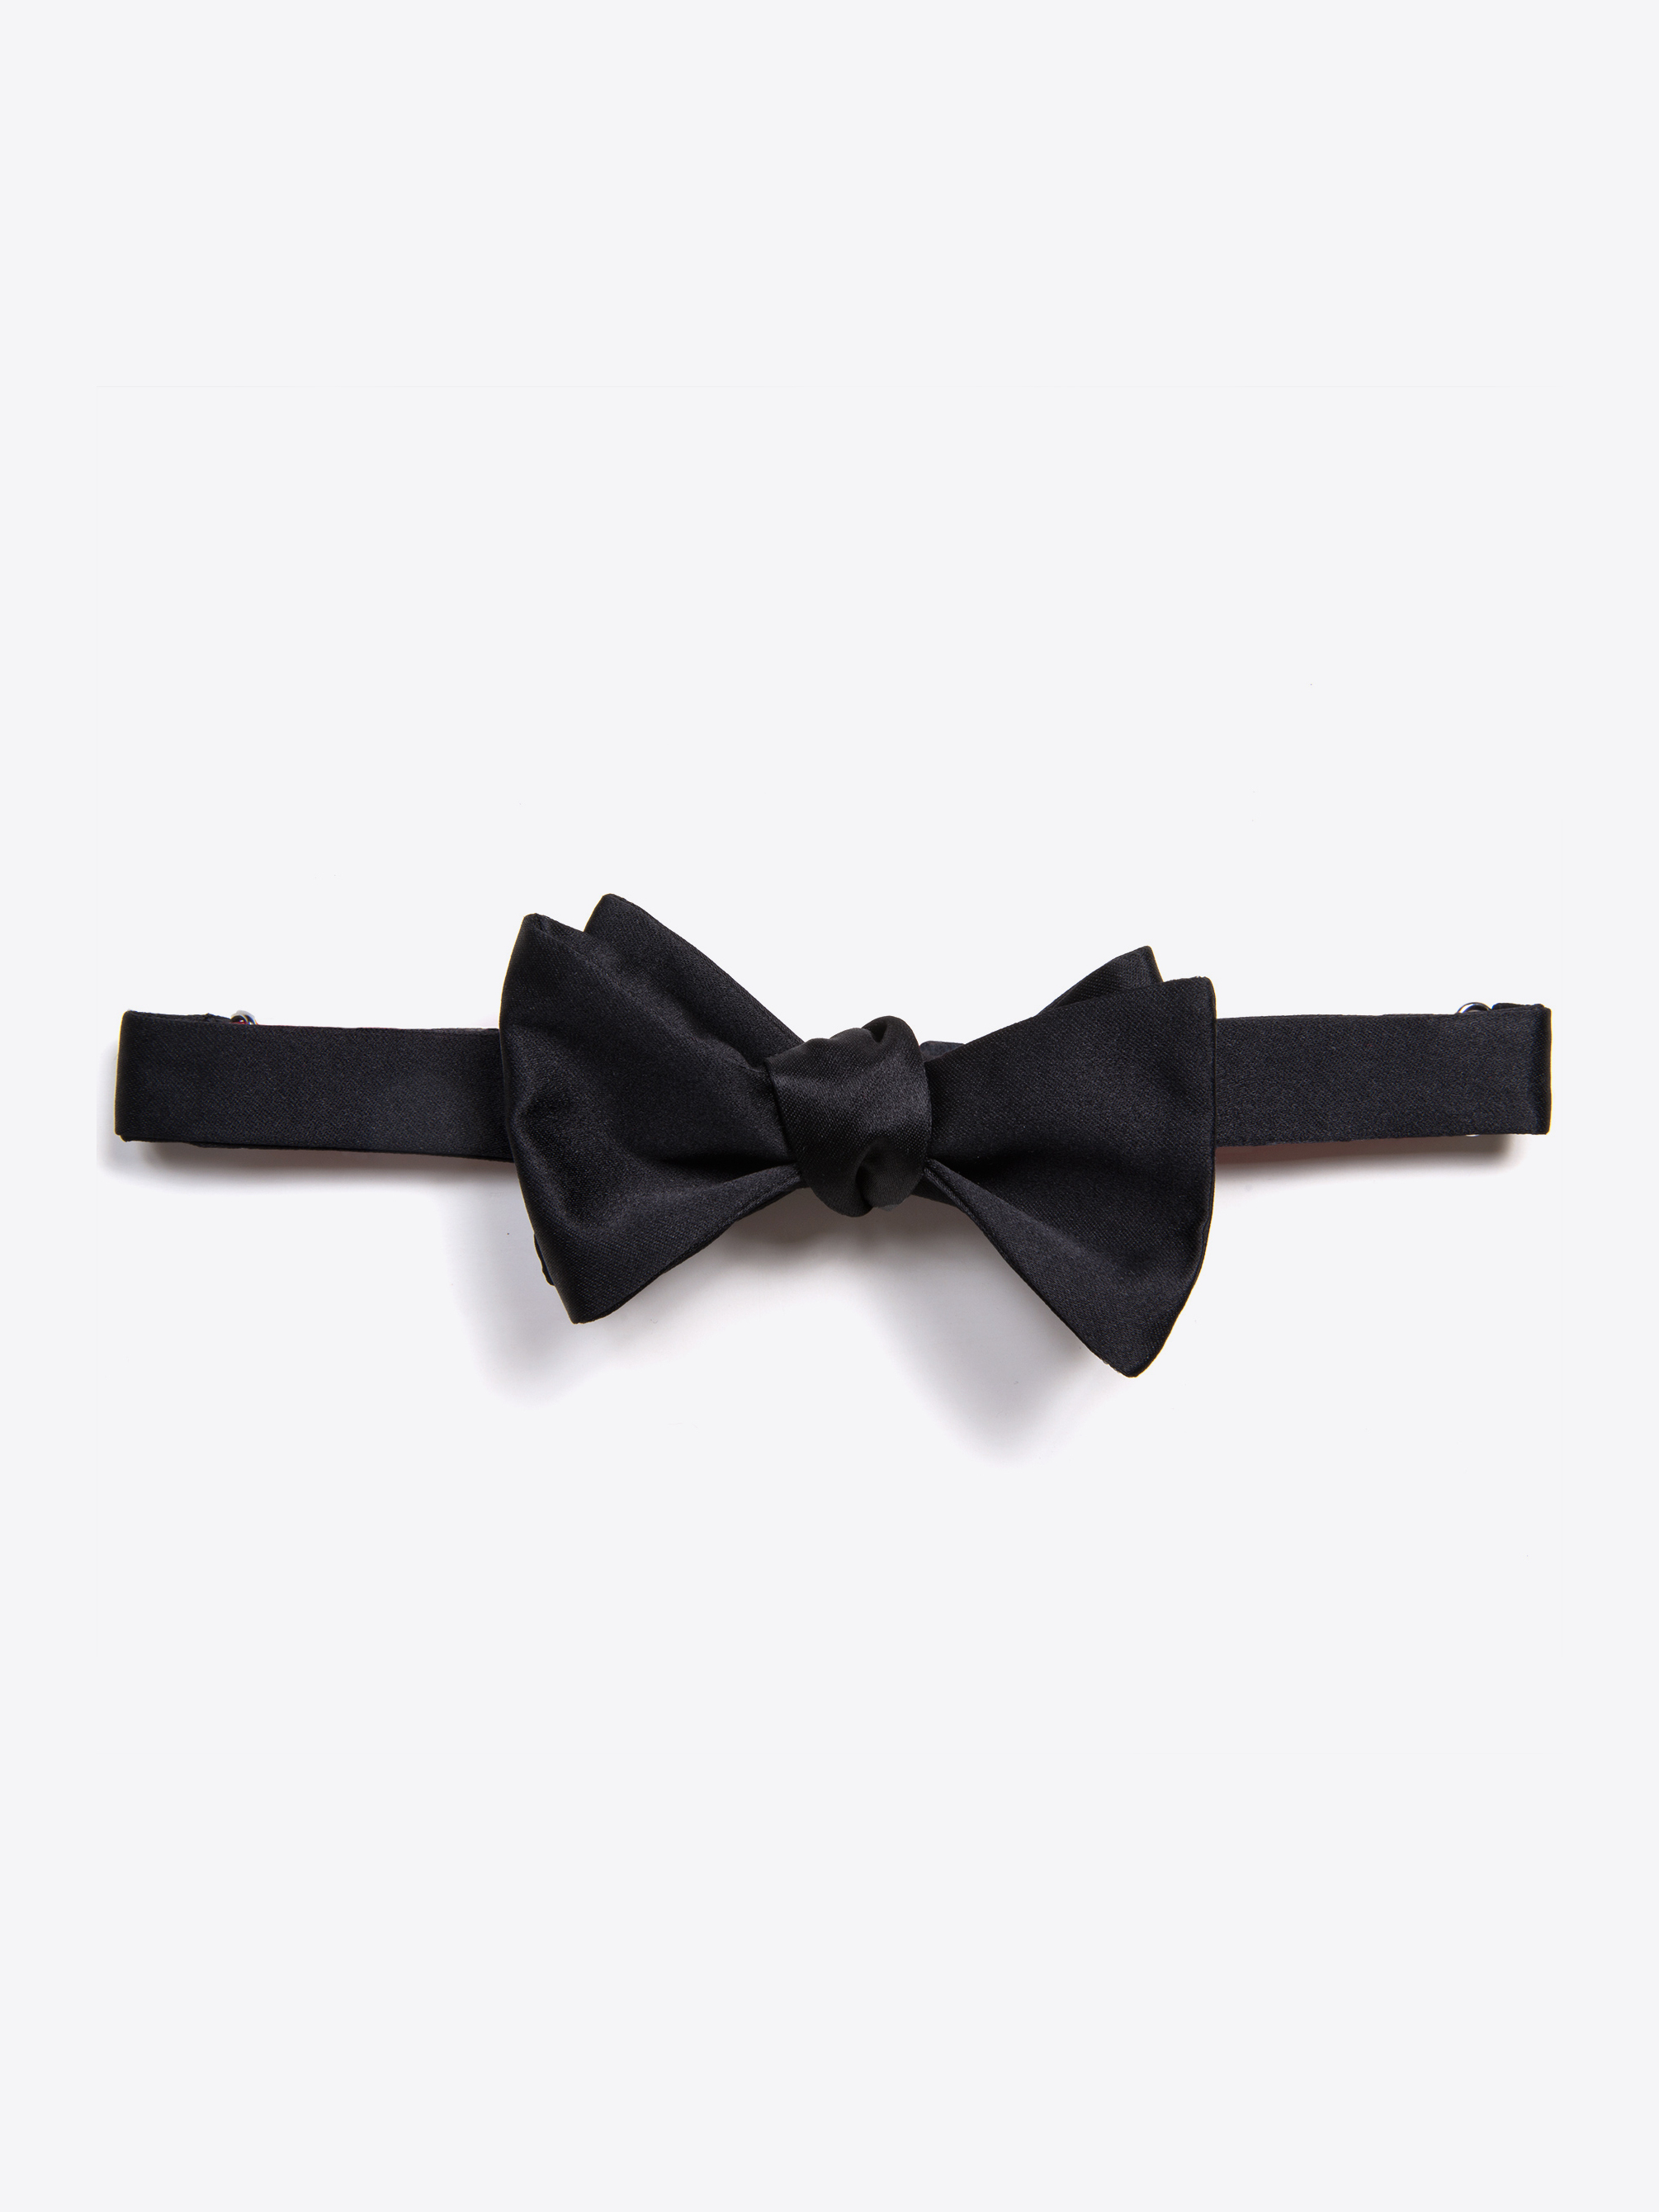 Zoom Image of Black Satin Bow Tie